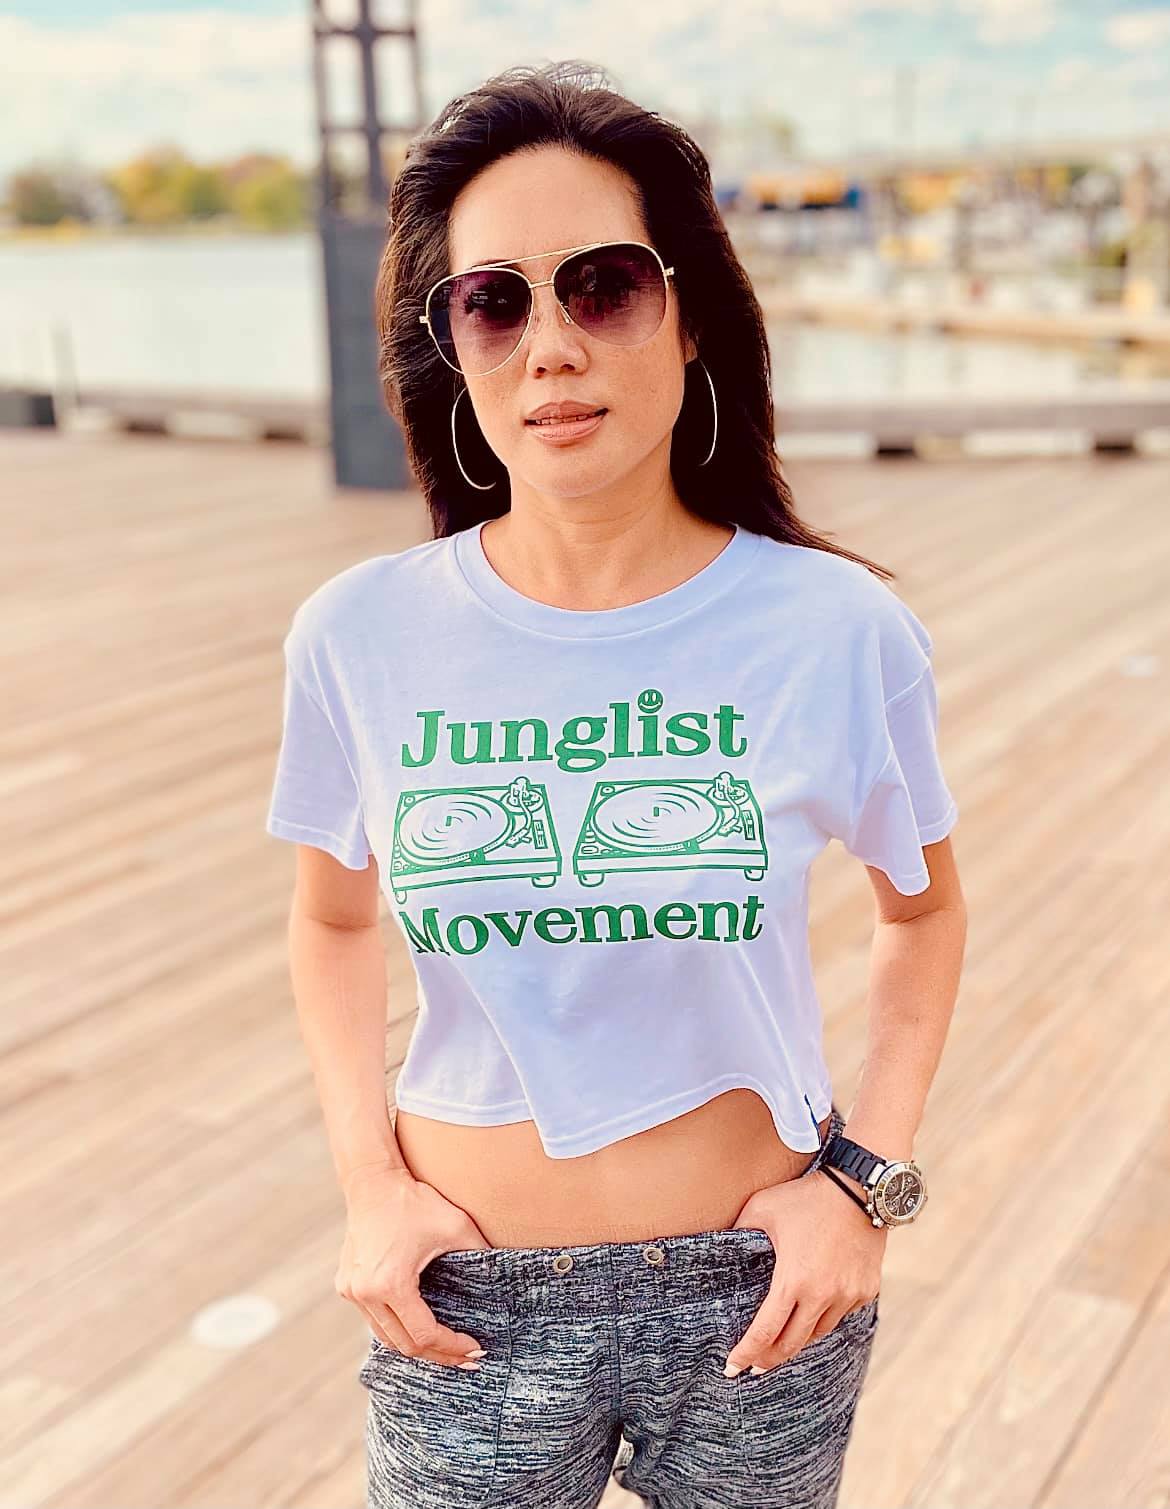 Junglist Movement Crop Top White (Green)